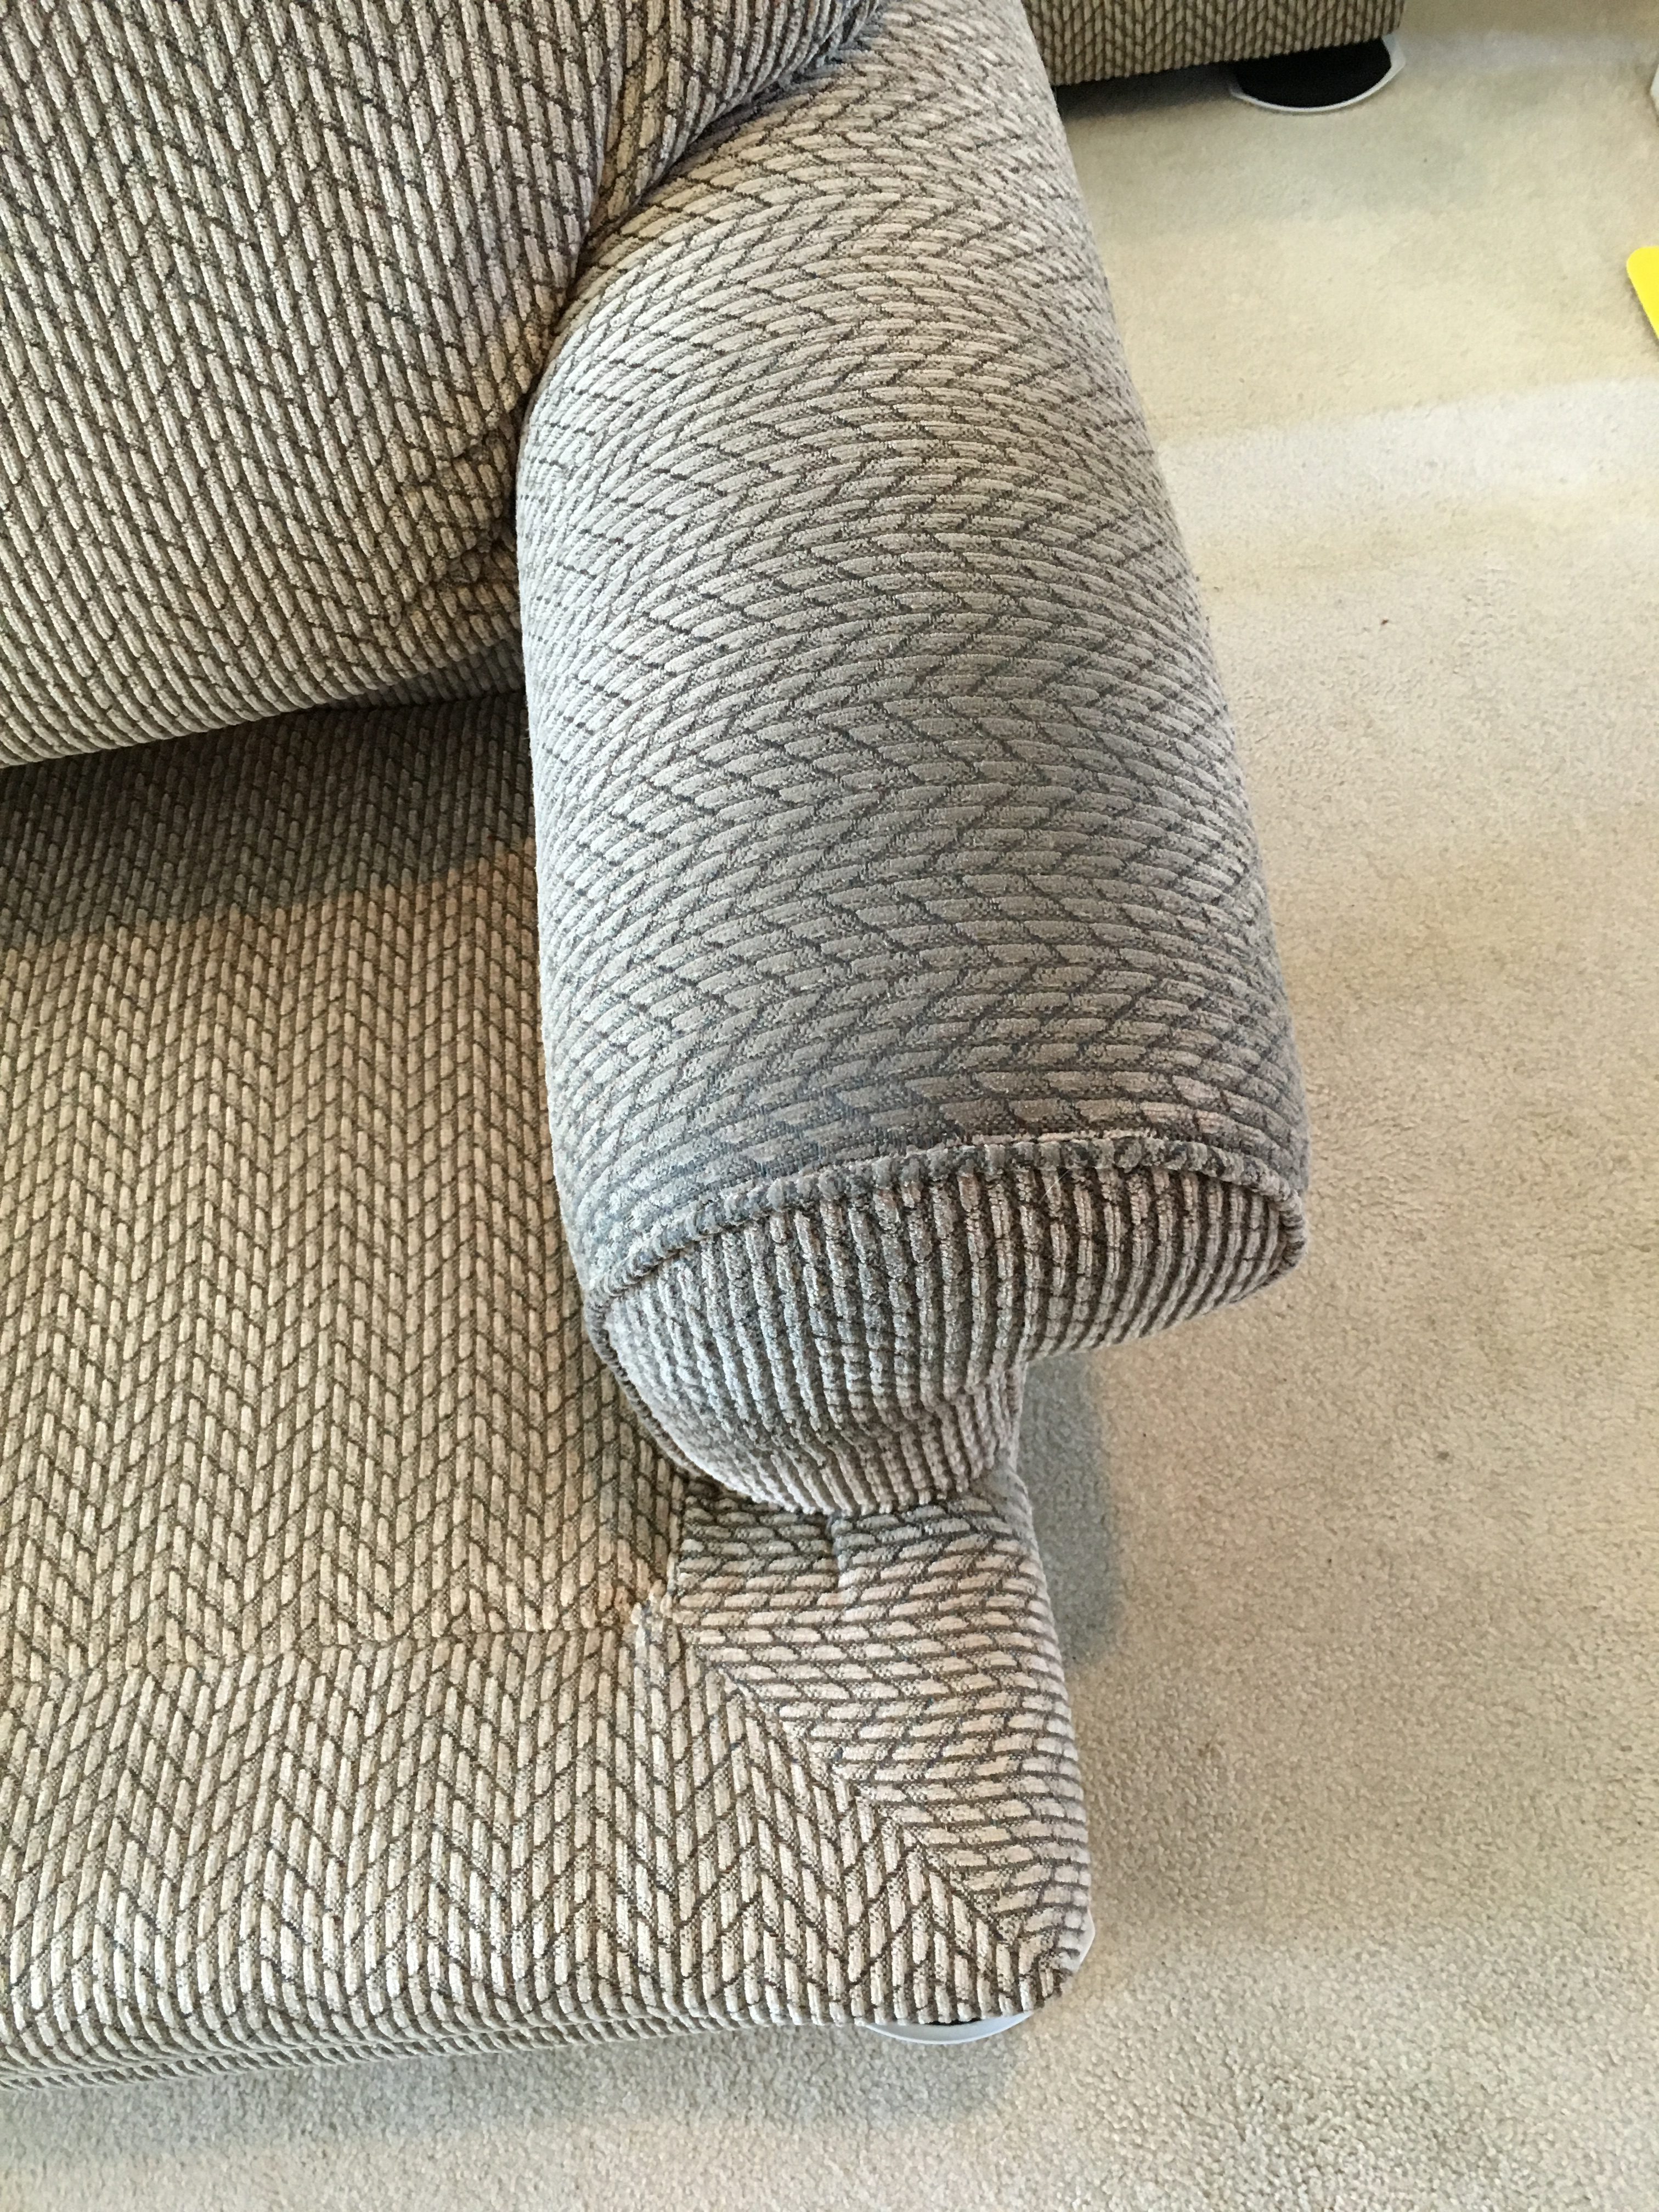 Dirty Sofa Arm - Before